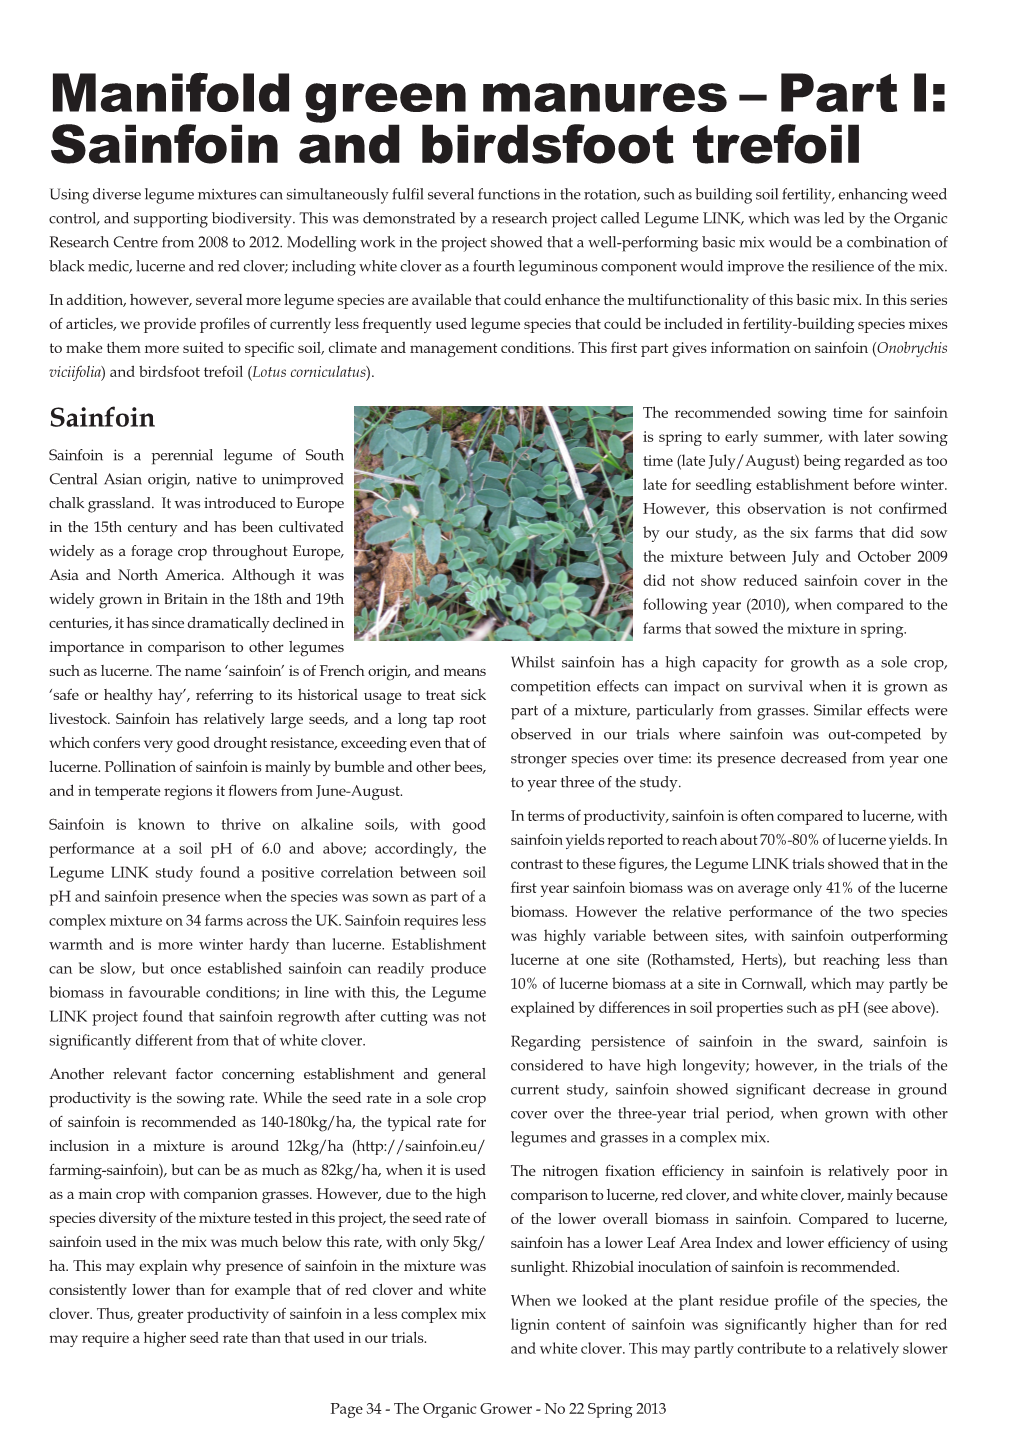 Manifold Green Manures – Part I: Sainfoin and Birdsfoot Trefoil